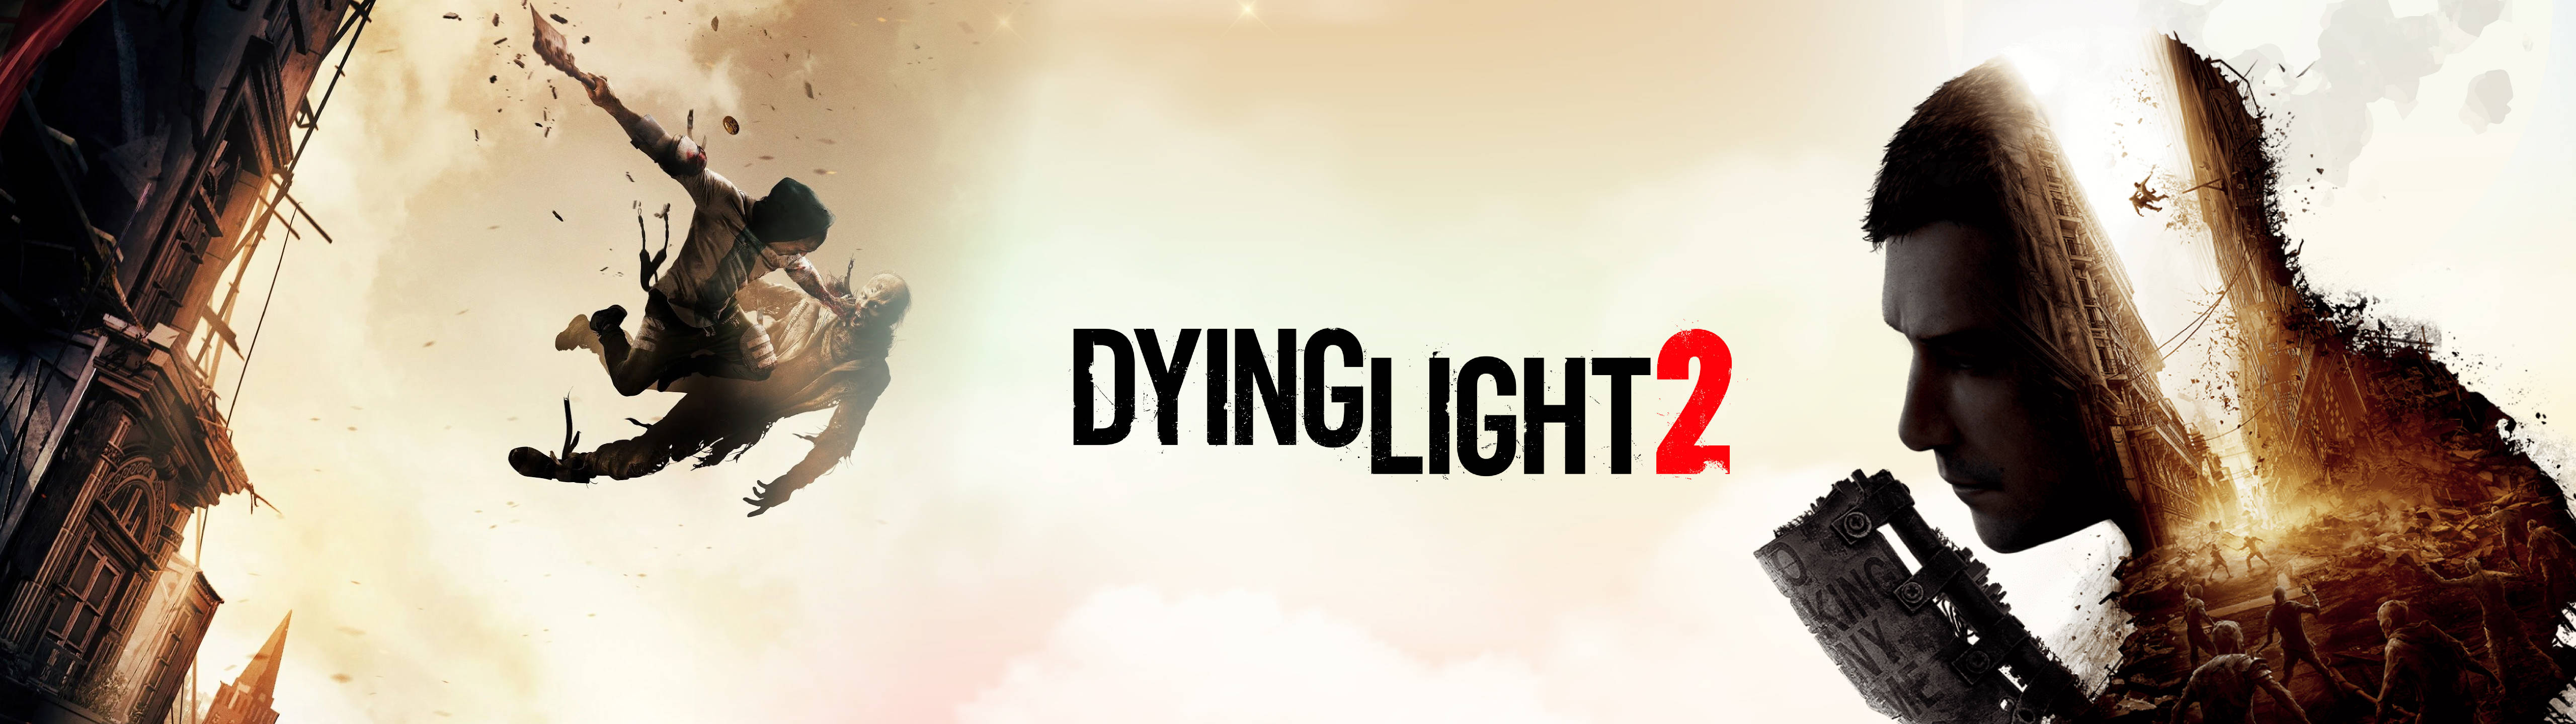 Dying Light 2 5120x1440 Gaming Wallpaper